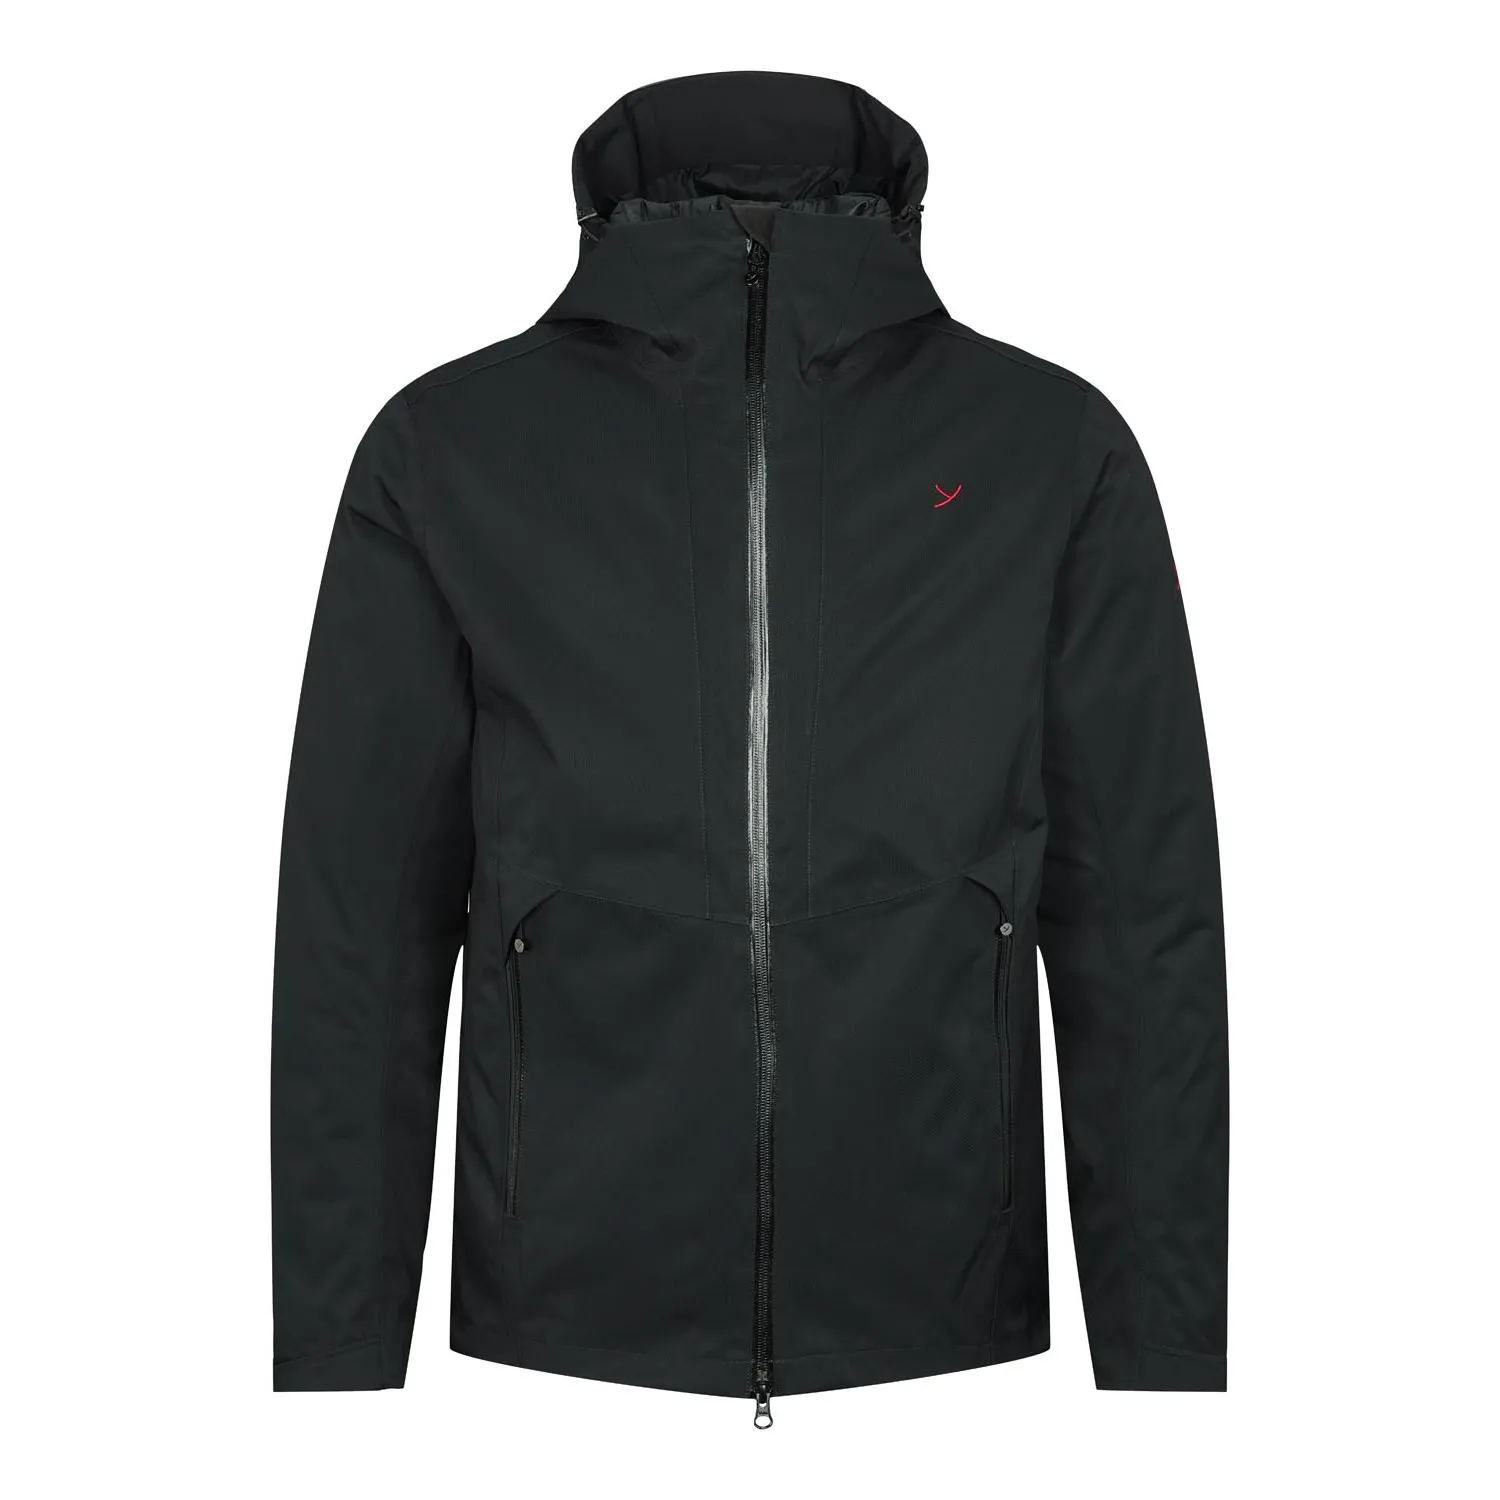 52_Nao-1059-3-in-1-jacket-for-men-Y-by-Nordisk-black-01.jpg